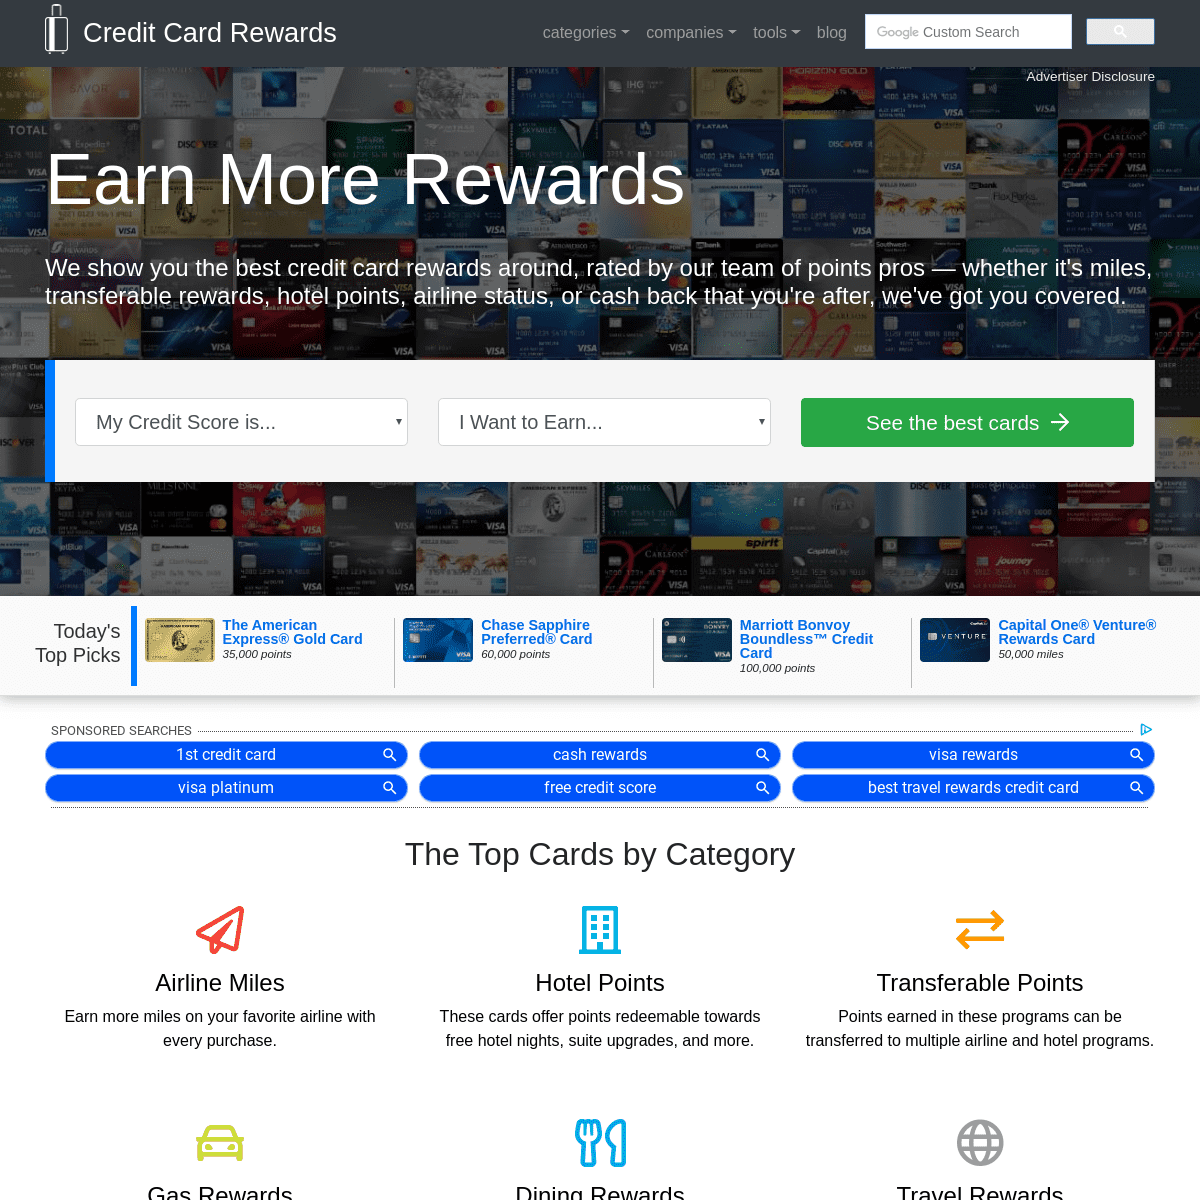 A complete backup of creditcardrewards.com